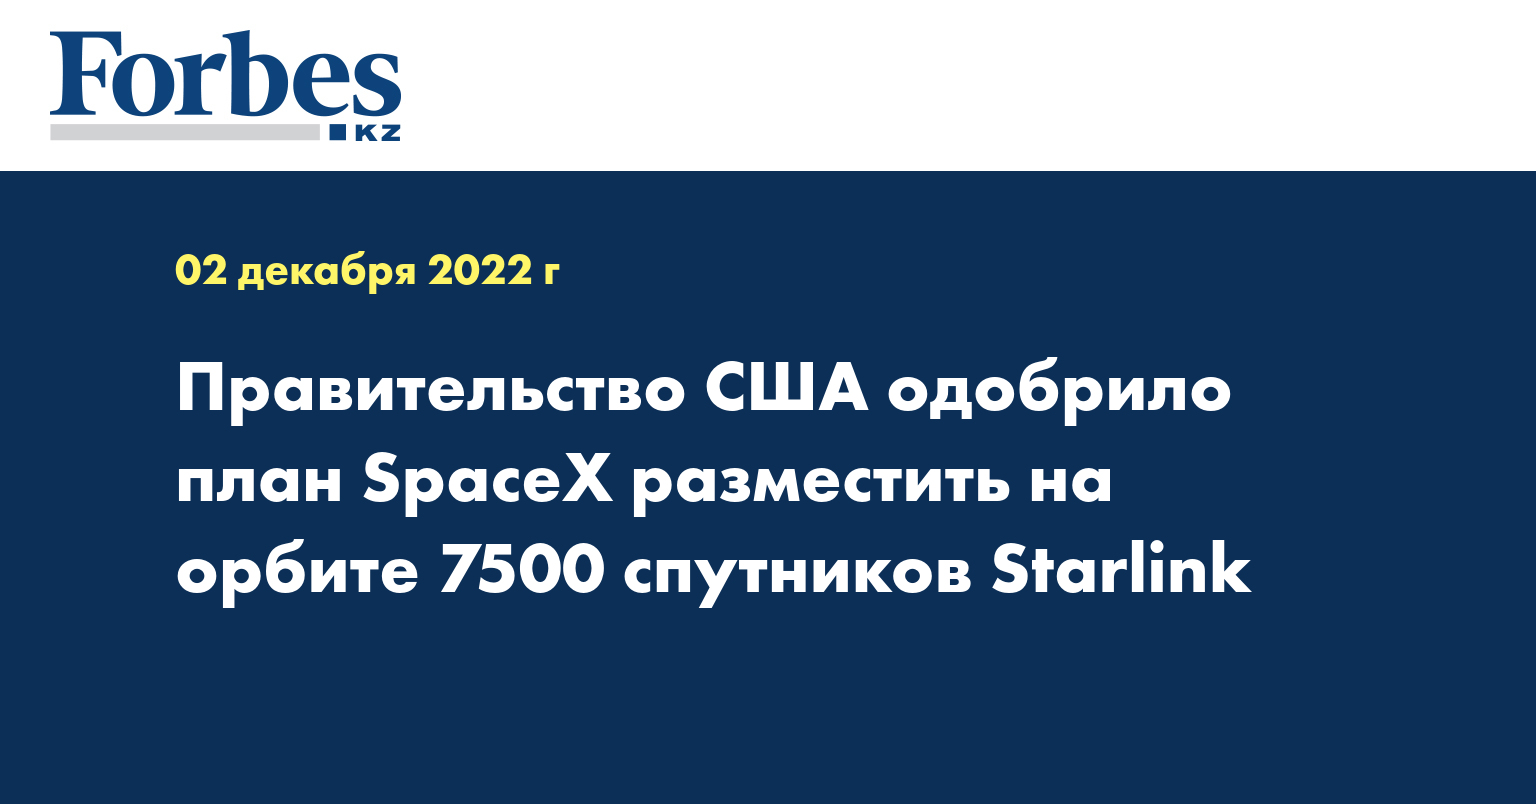 Правительство США одобрило план SpaceX разместить на орбите 7500 спутников Starlink